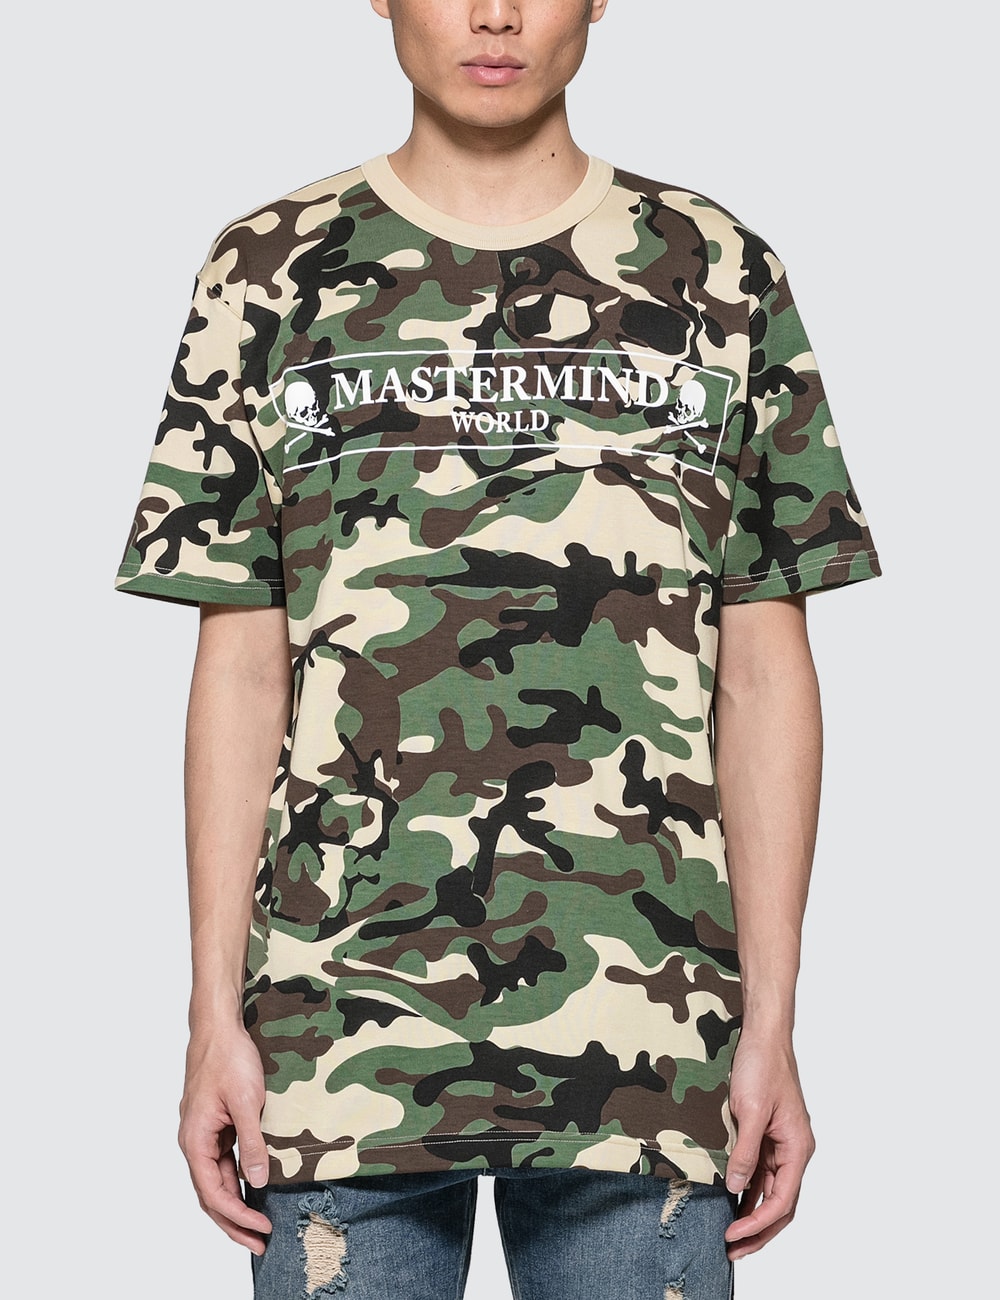 Mastermind World - T-shirt | HBX